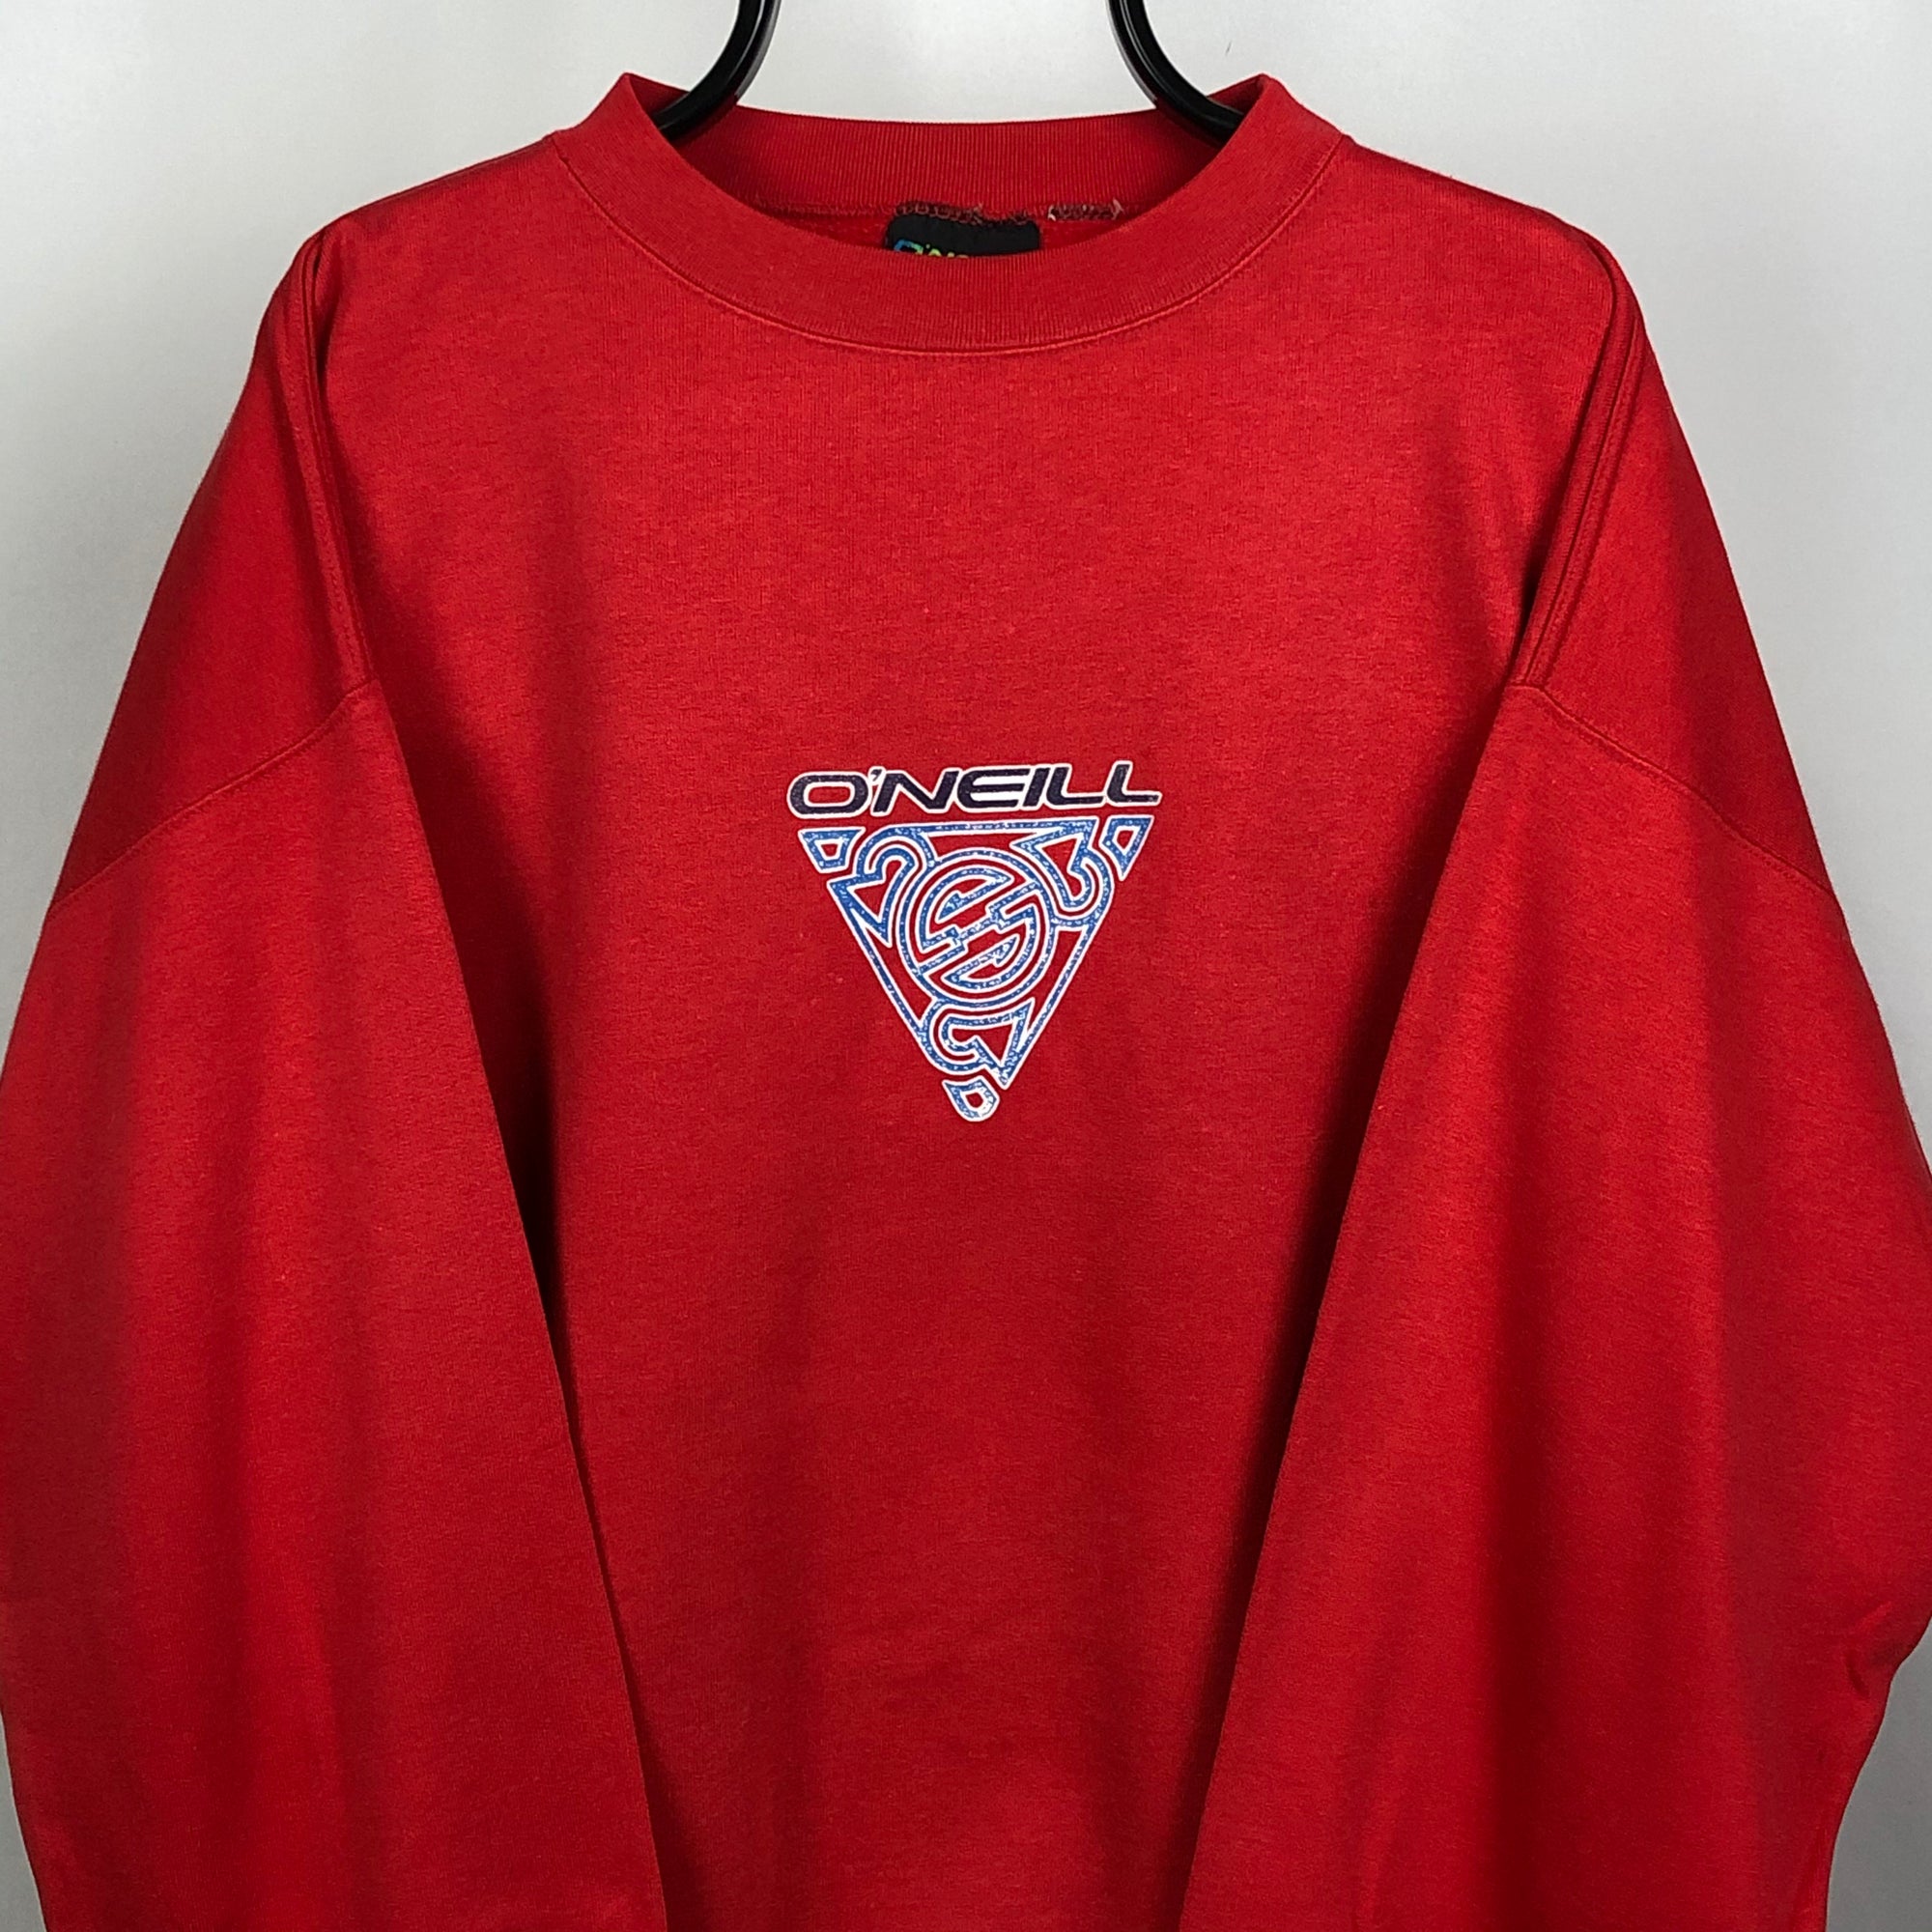 O'Neill Graphic Sweatshirt in Red - Men's Large/Women's XL